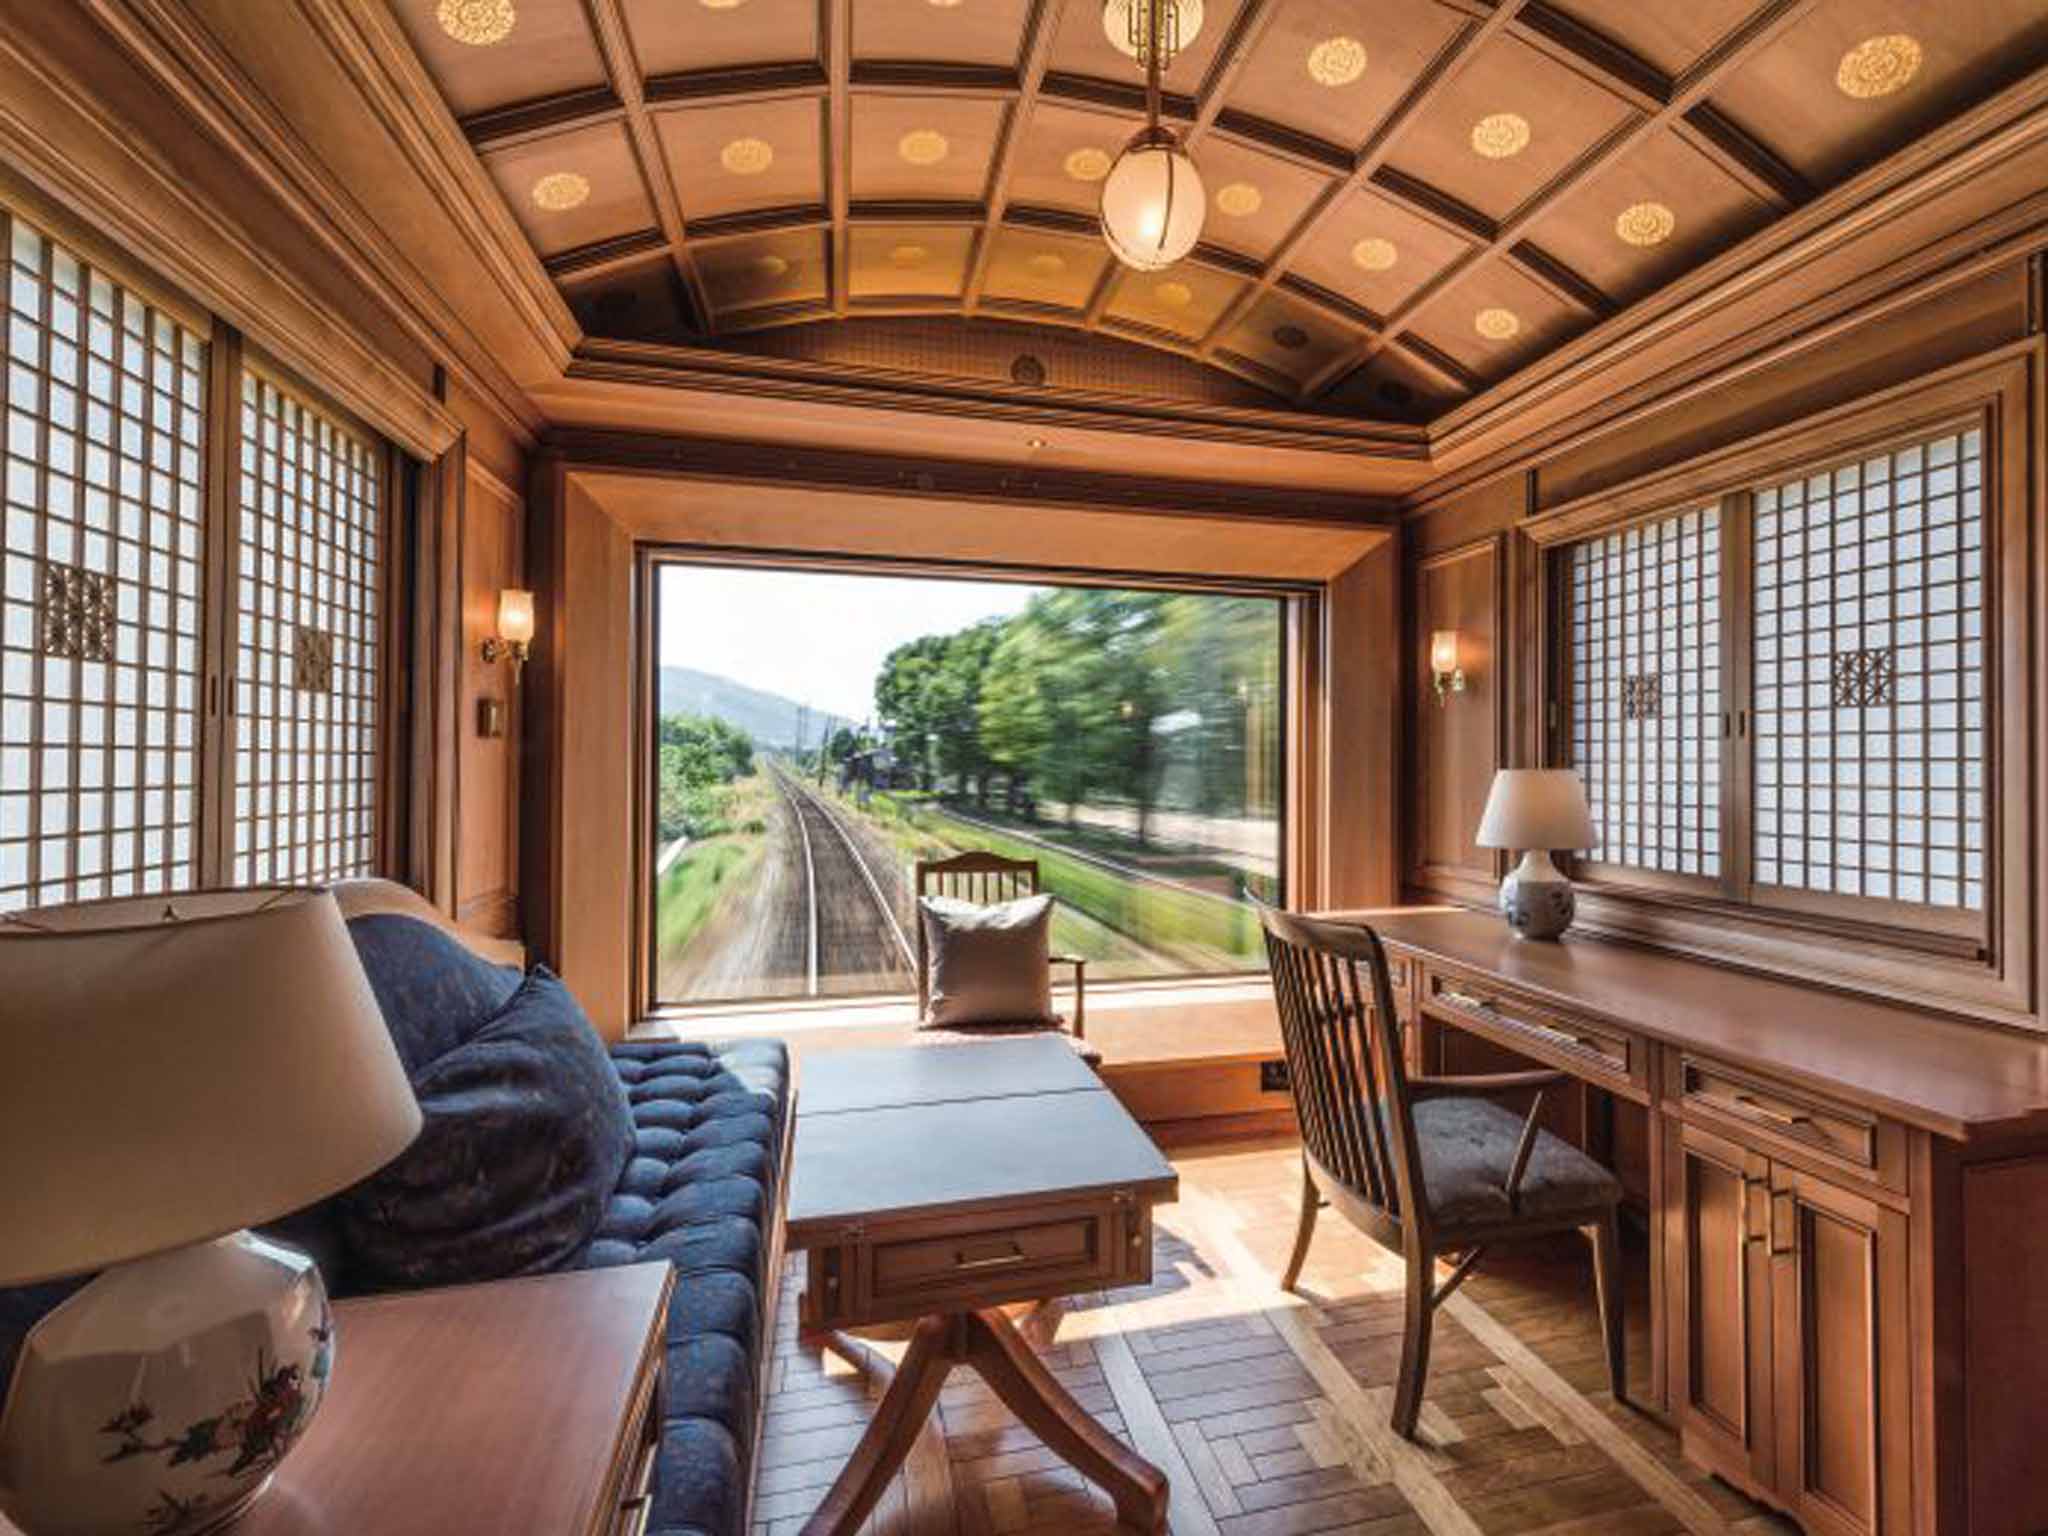 The luxurious train